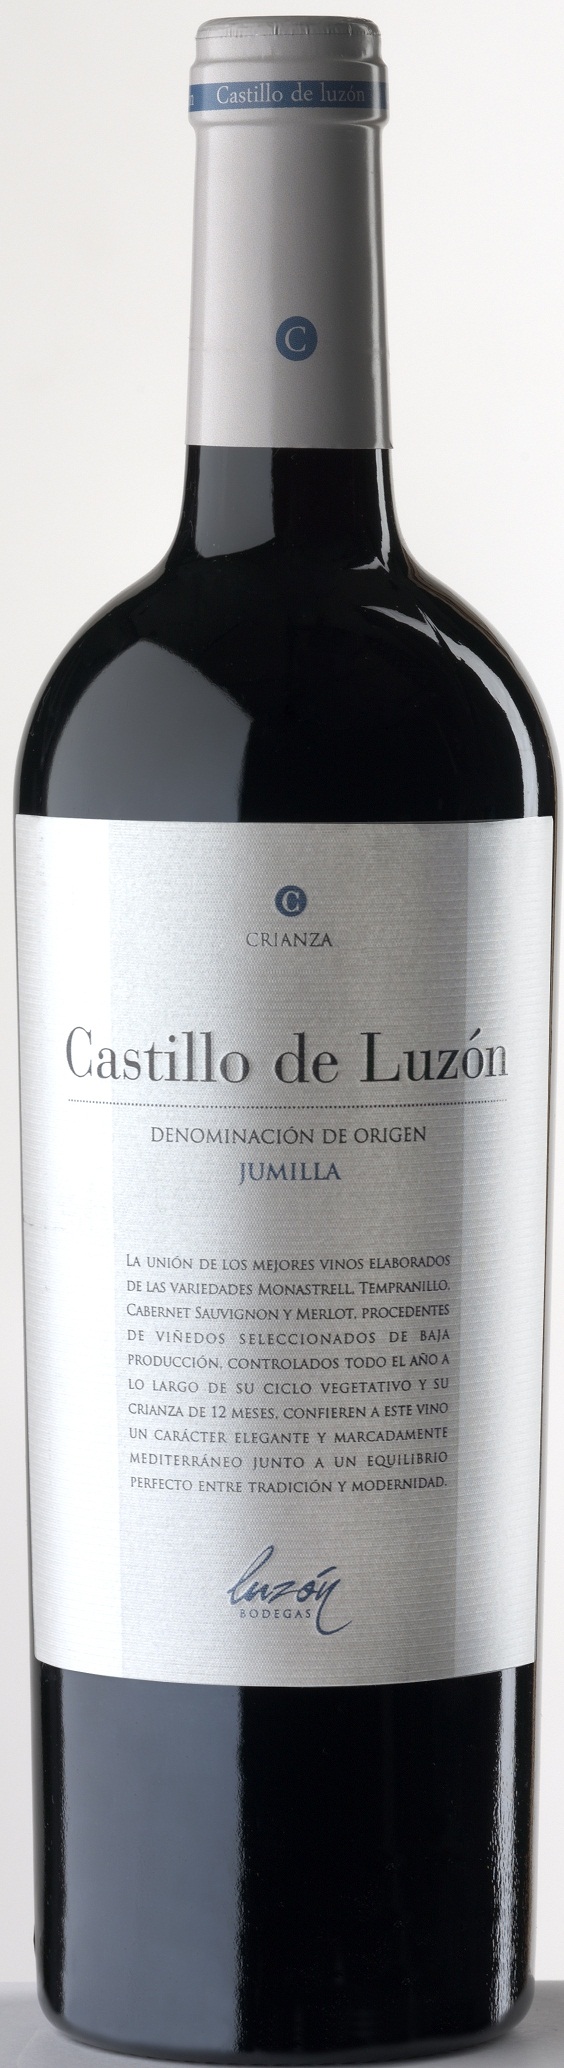 Image of Wine bottle Castillo de Luzón